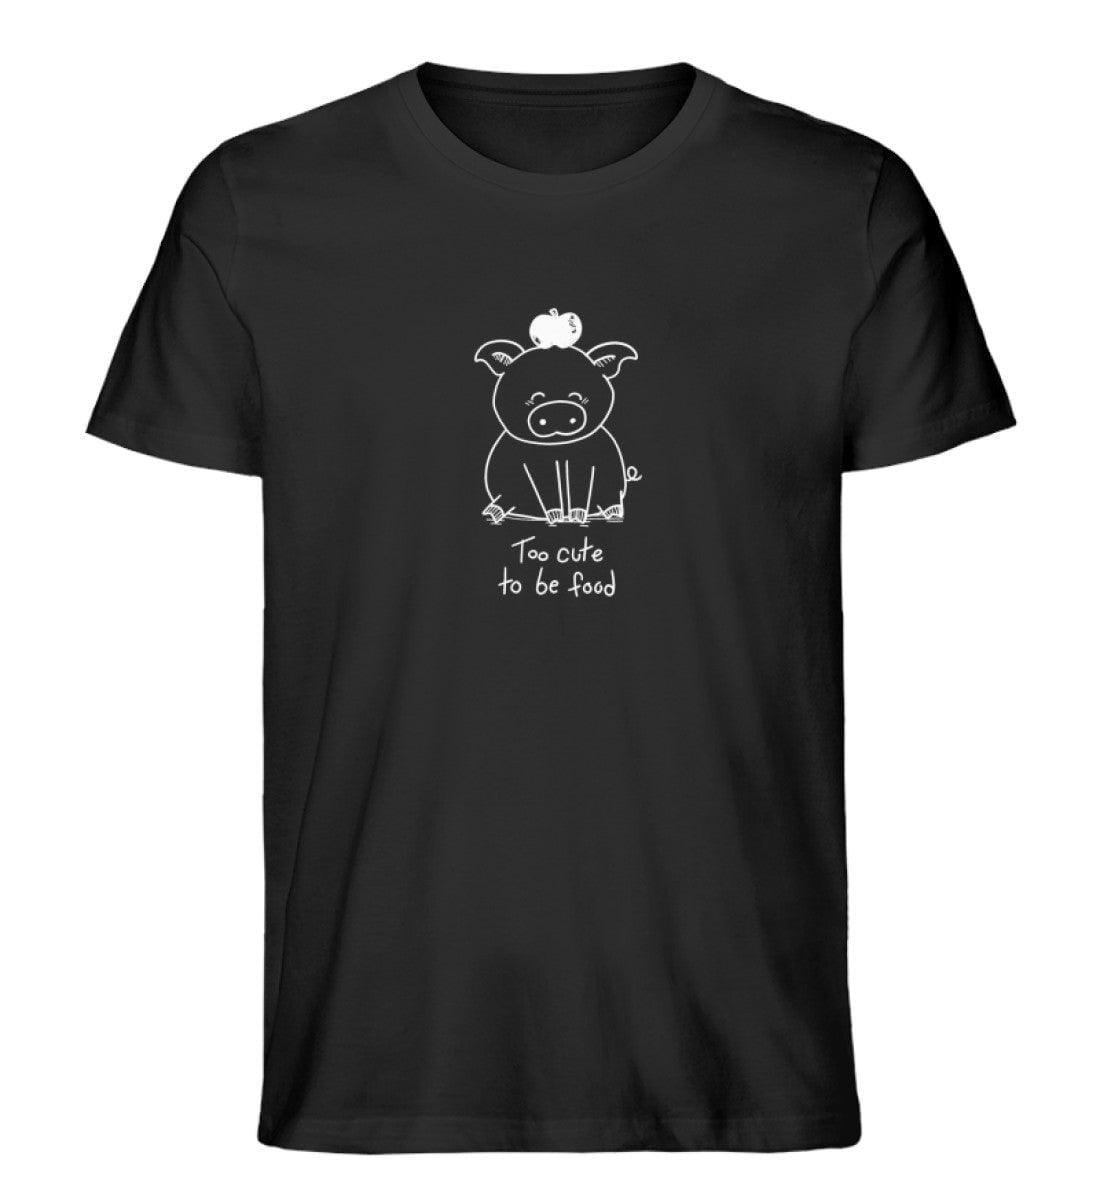 Too cute [Herr Tierfreund] - Unisex Organic Shirt Shirtee Schwarz S 